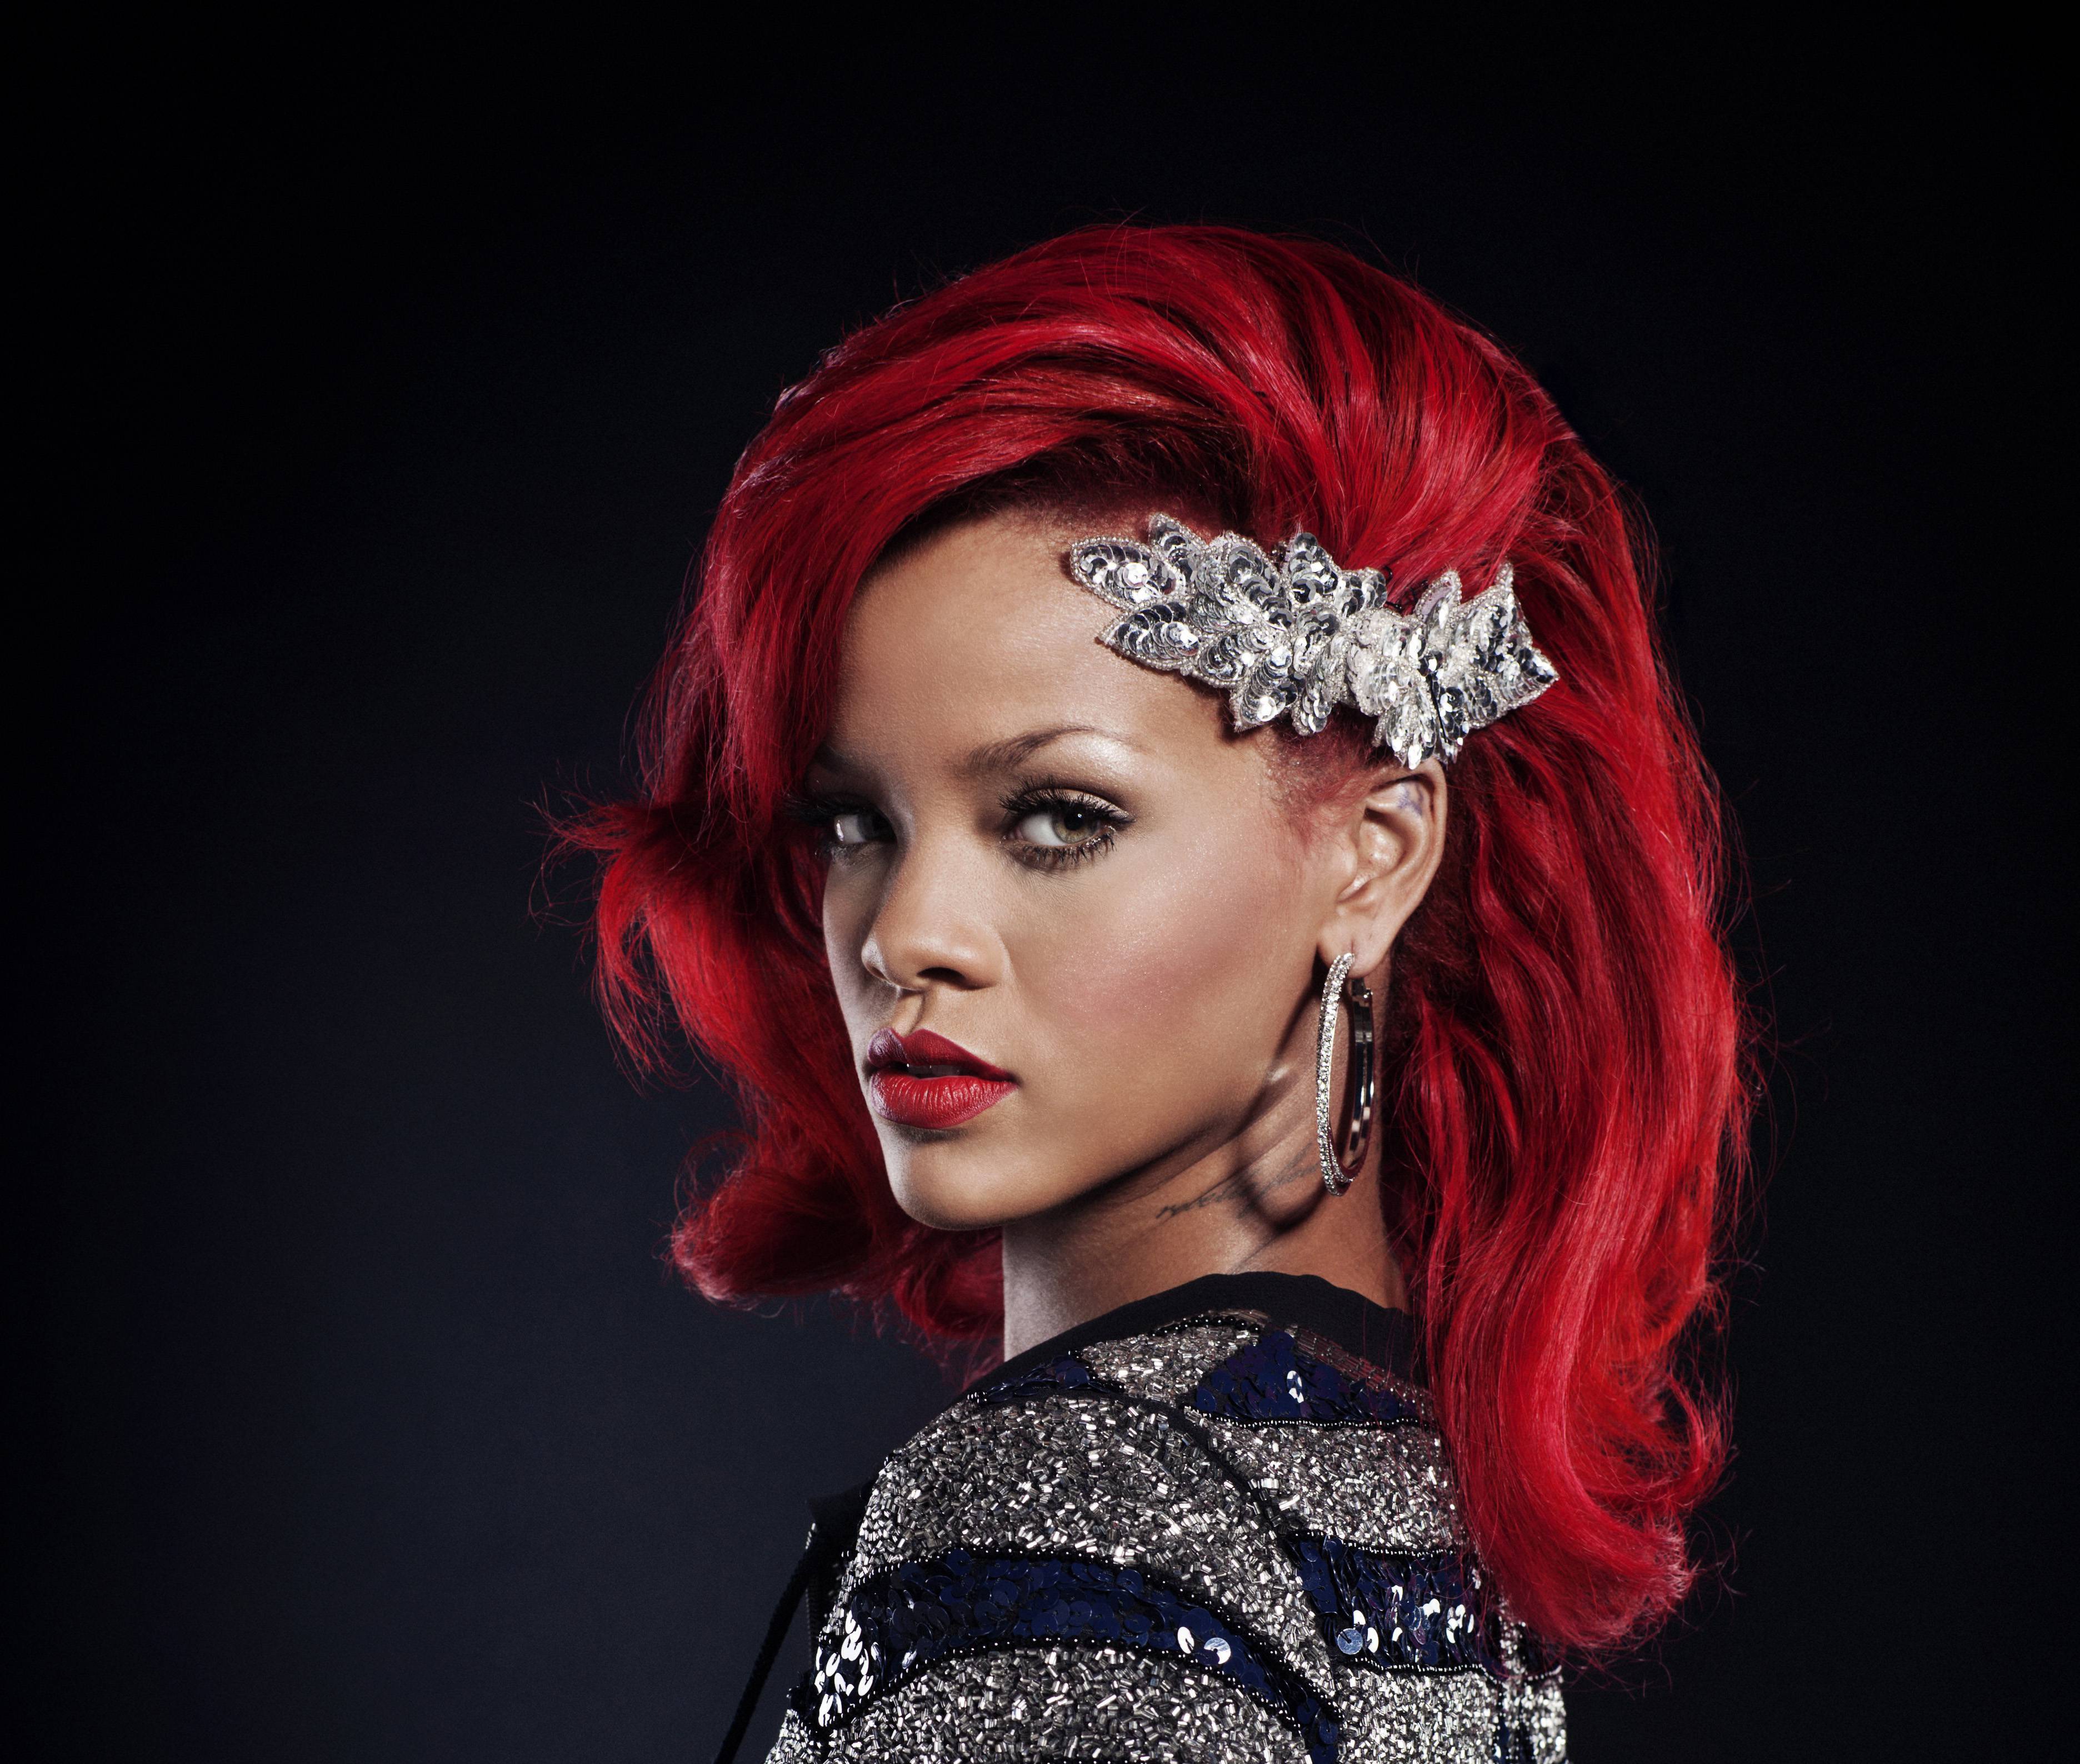 Earrings Jewelry Lipstick Red Hair Rihanna Singer 3744x3176